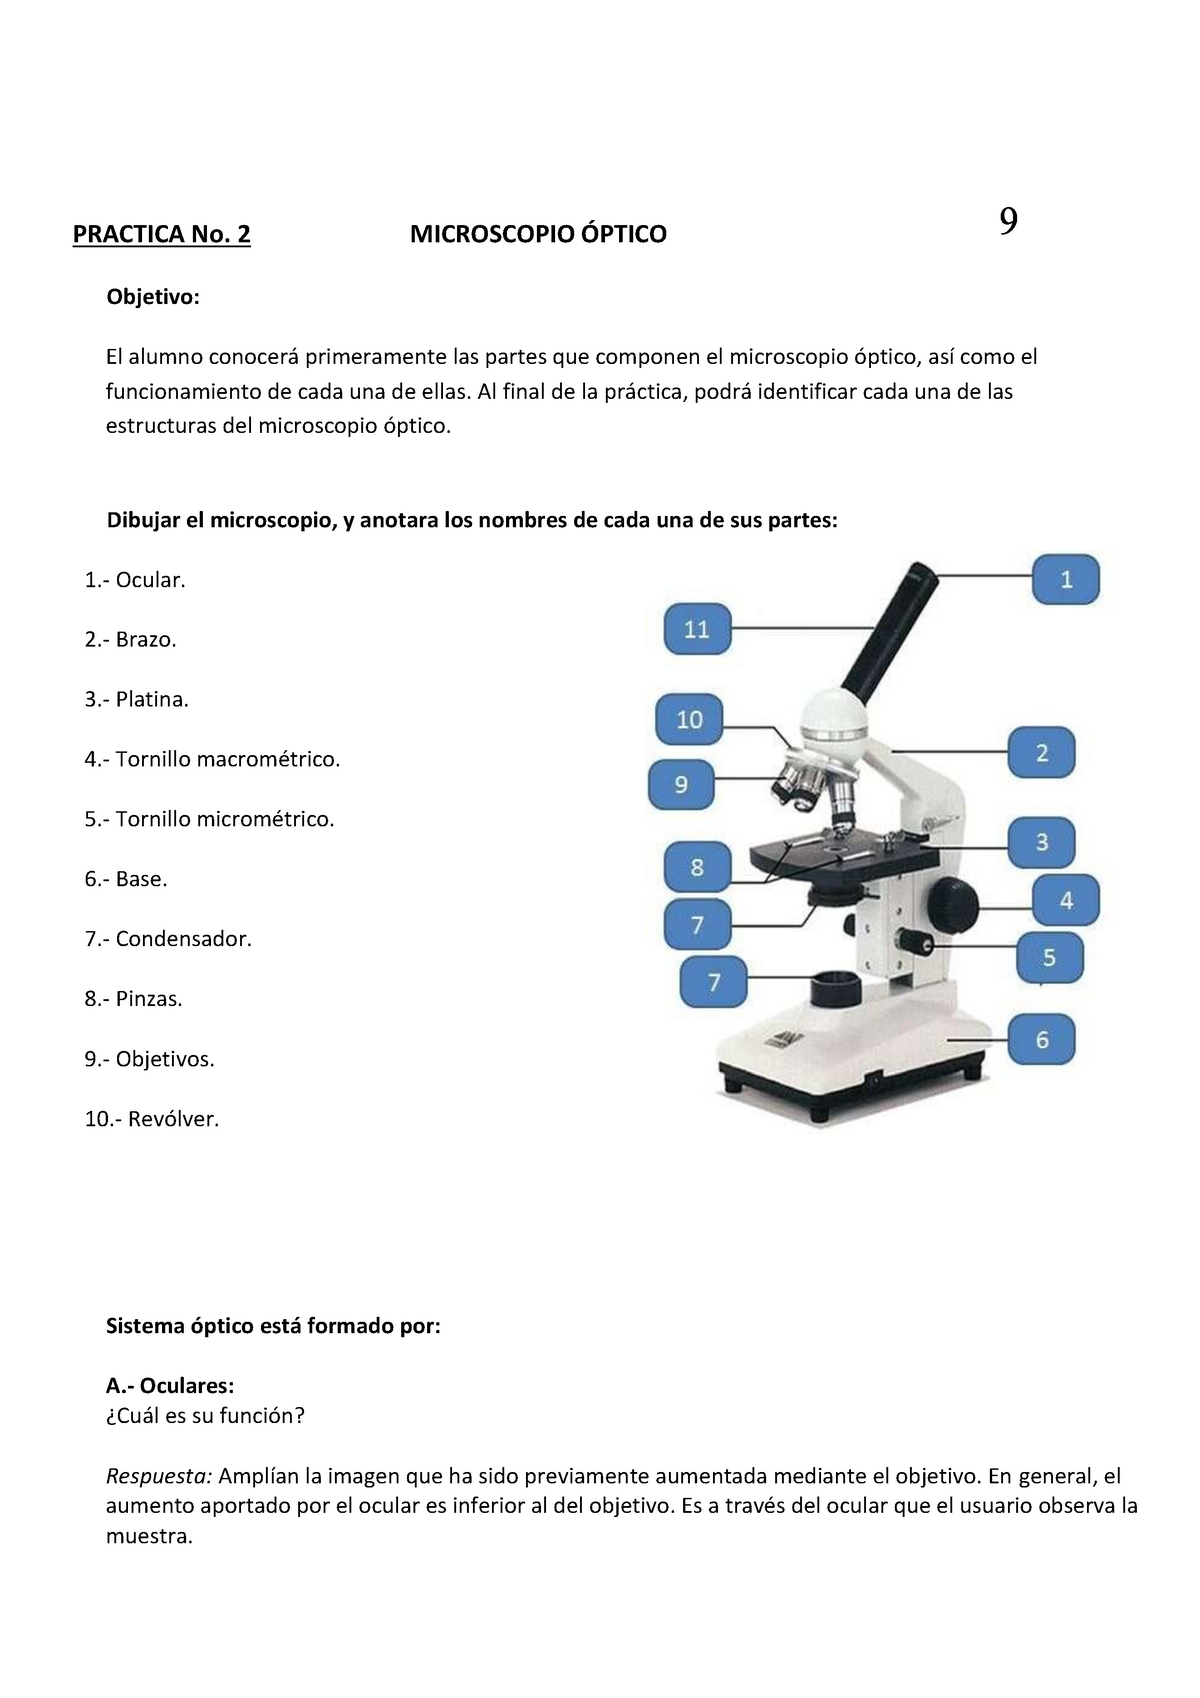 El Microscopio Ptico Reporte Practica No Microscopio Ptico